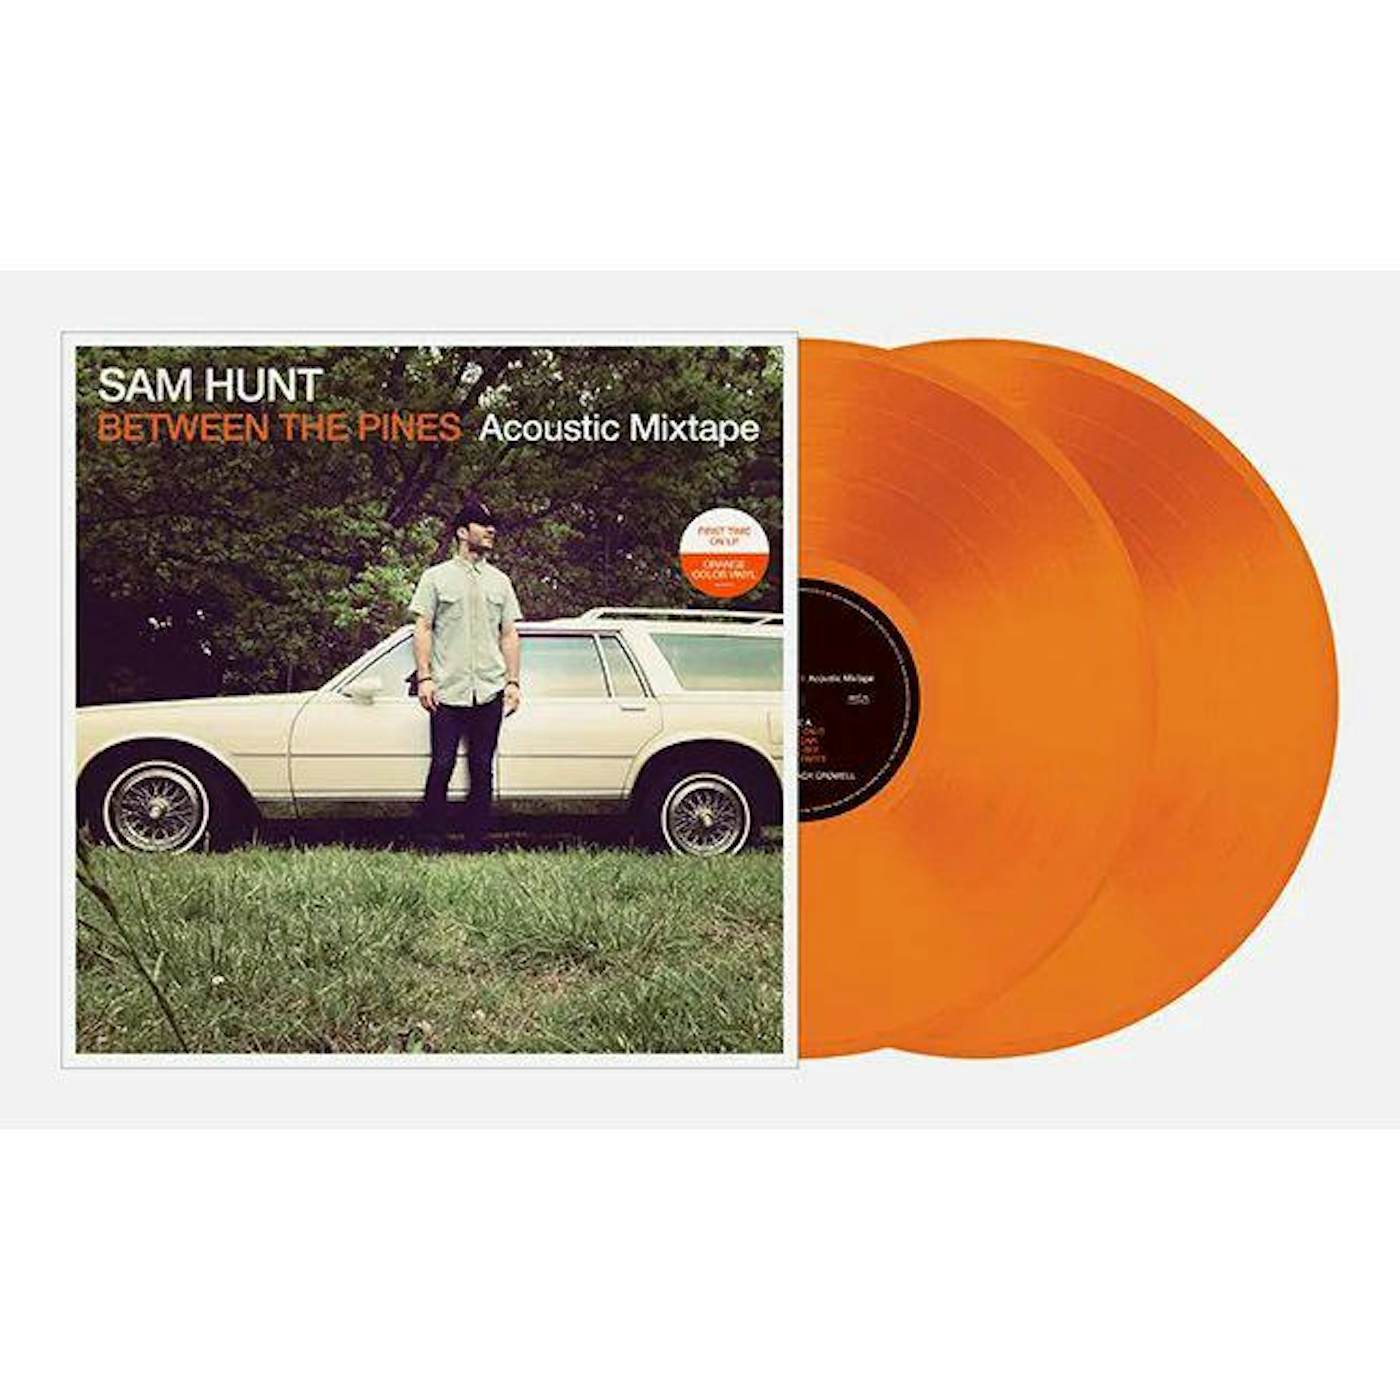 Sam Hunt Between The Pines (Acoustic Mixtape) (Orange) Vinyl Record